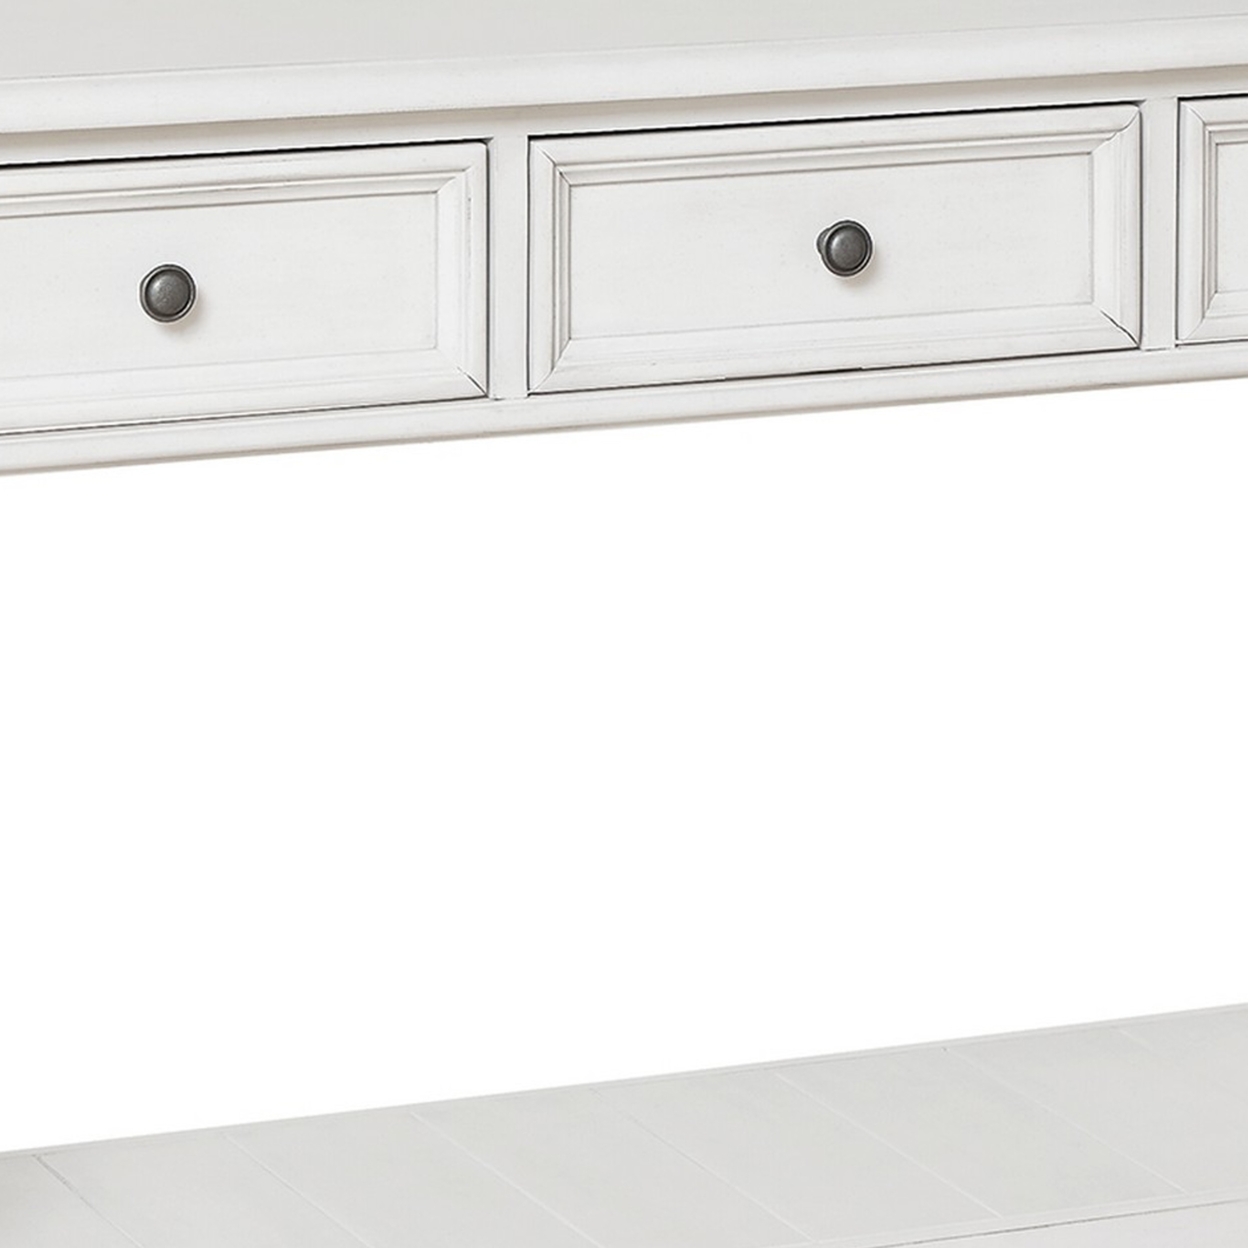 50 Inch Sofa Console Table, 3 Drawers And Open Shelf, Classic White FInish- Saltoro Sherpi